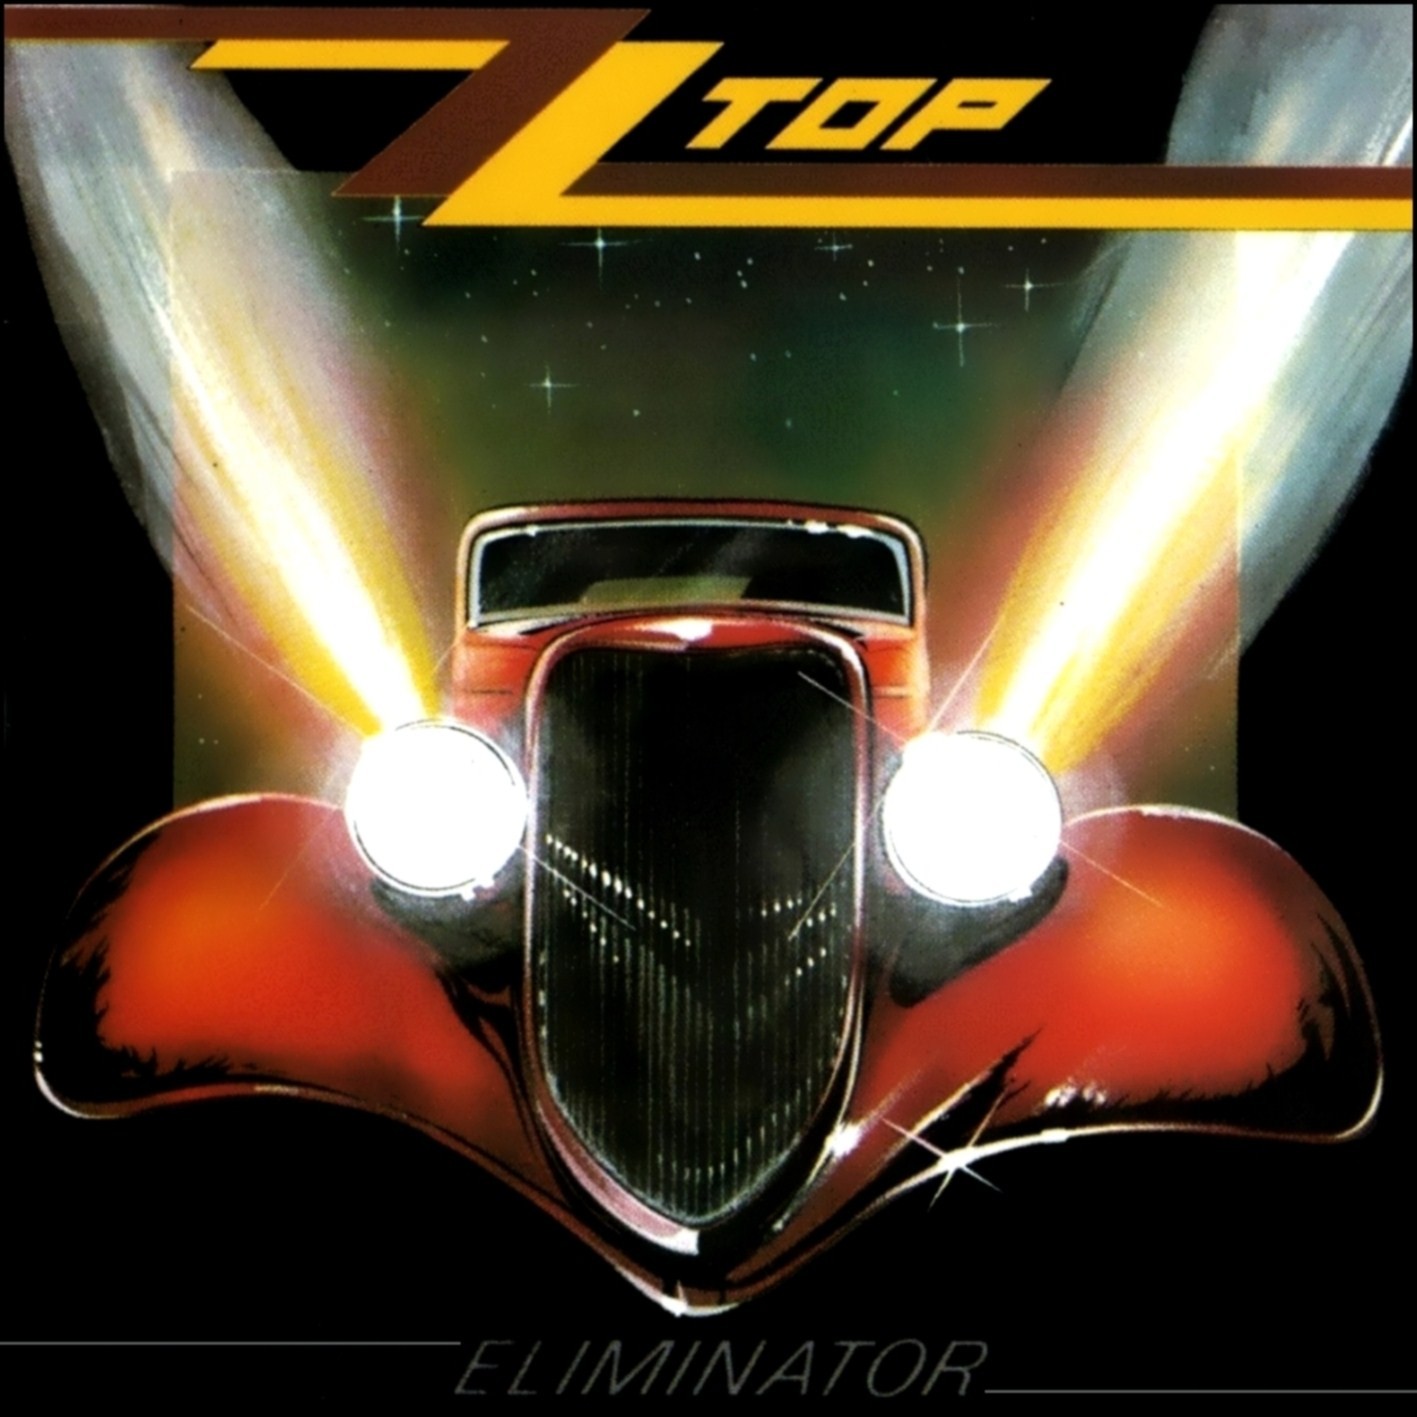 ZZ TOP - Eliminator cover 